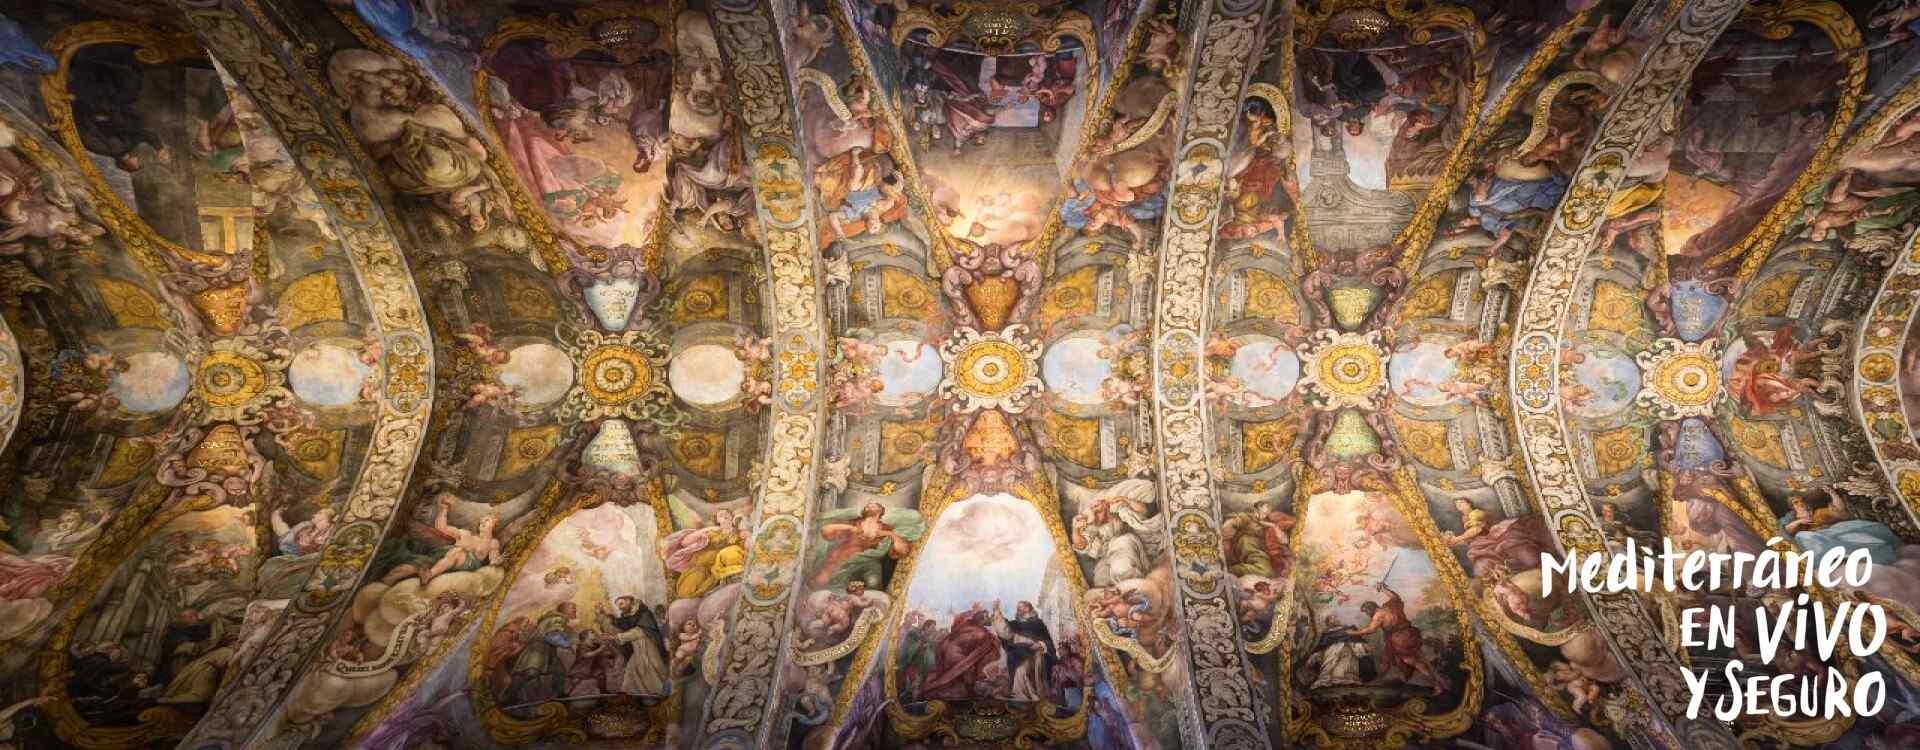  Image of La Parroquia de San Nicolás the Valencian Sistine Chapel	